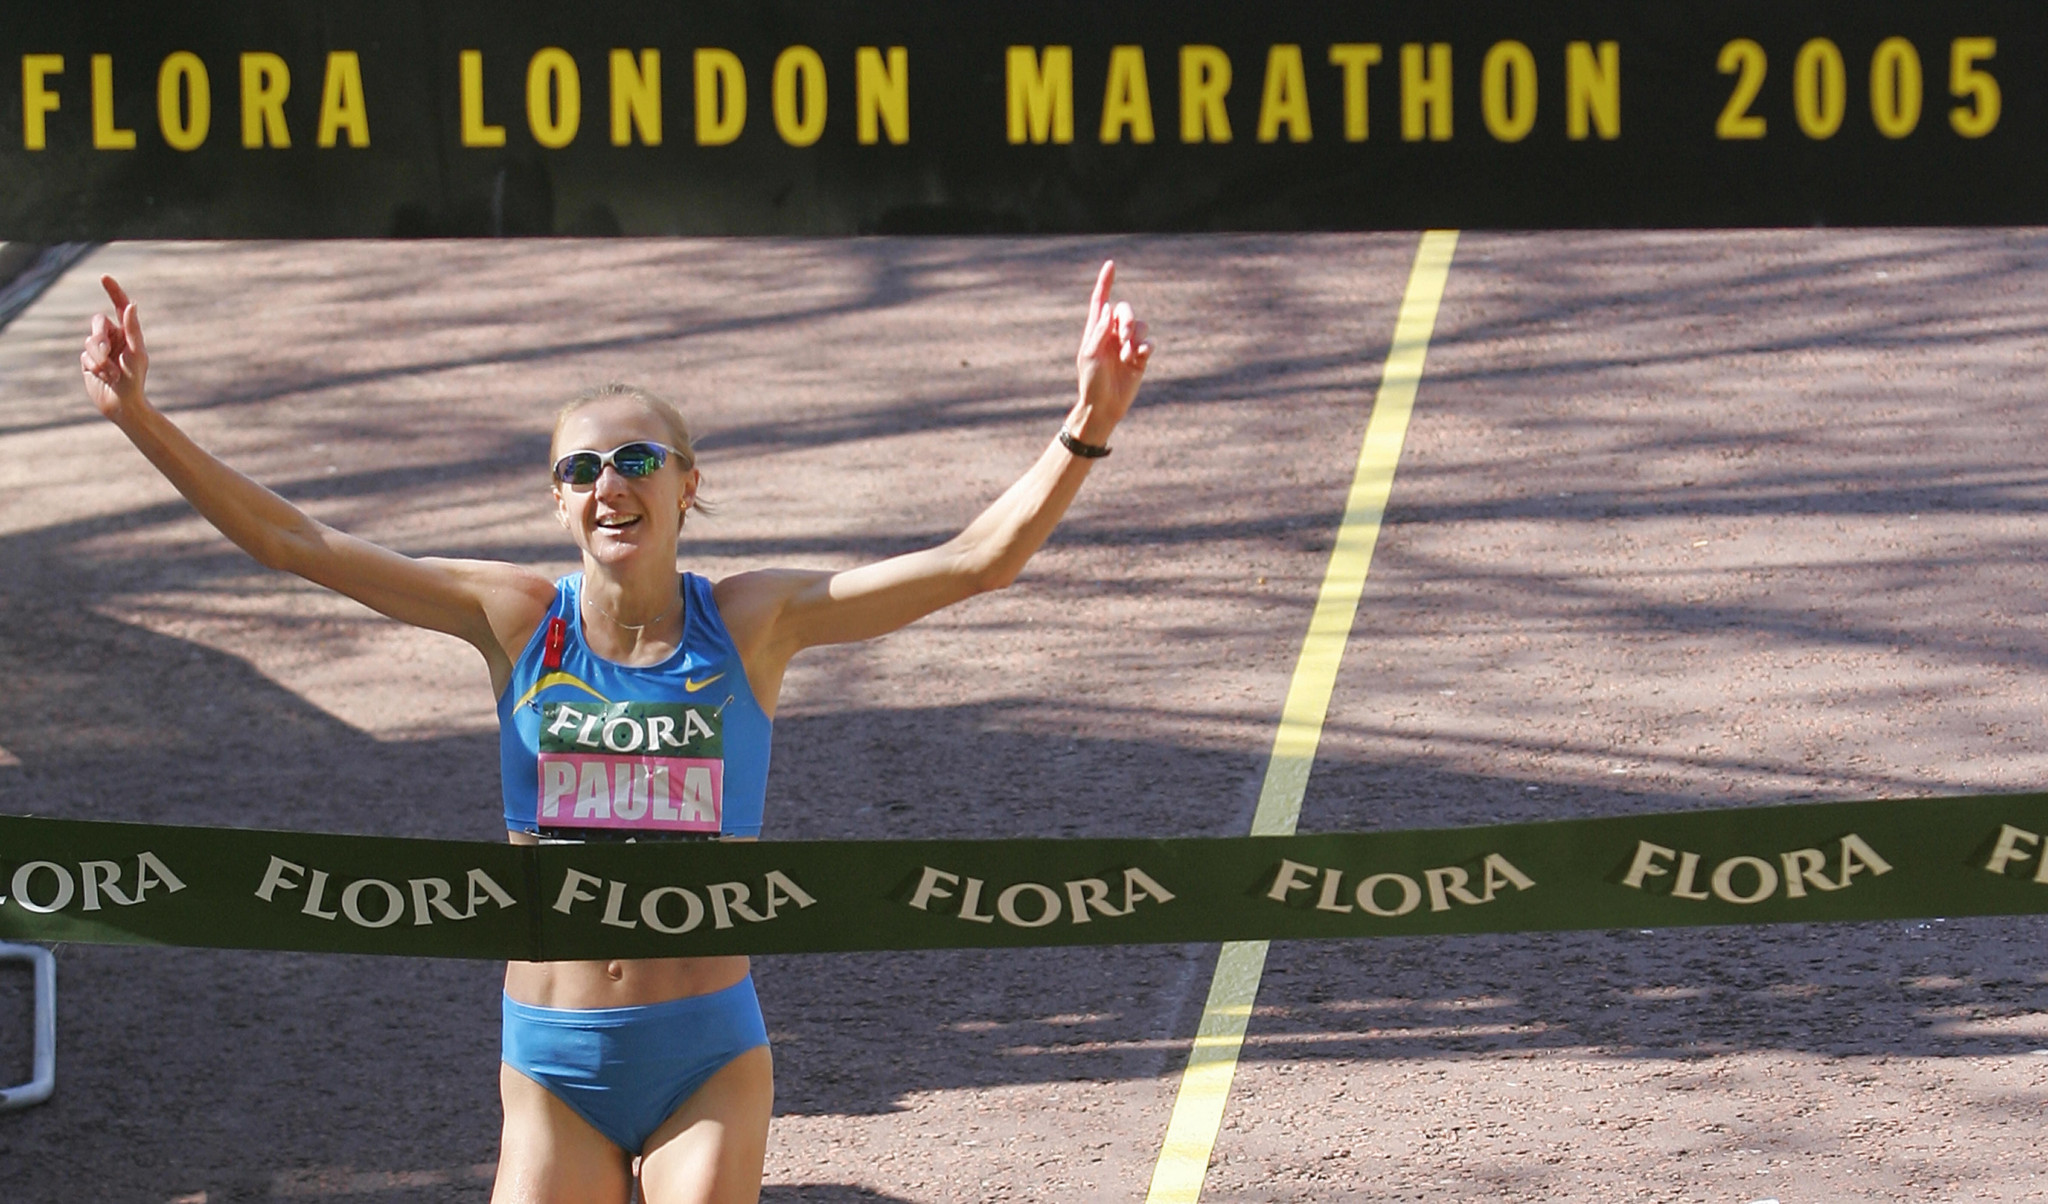 Flora returns as partner of London Marathon